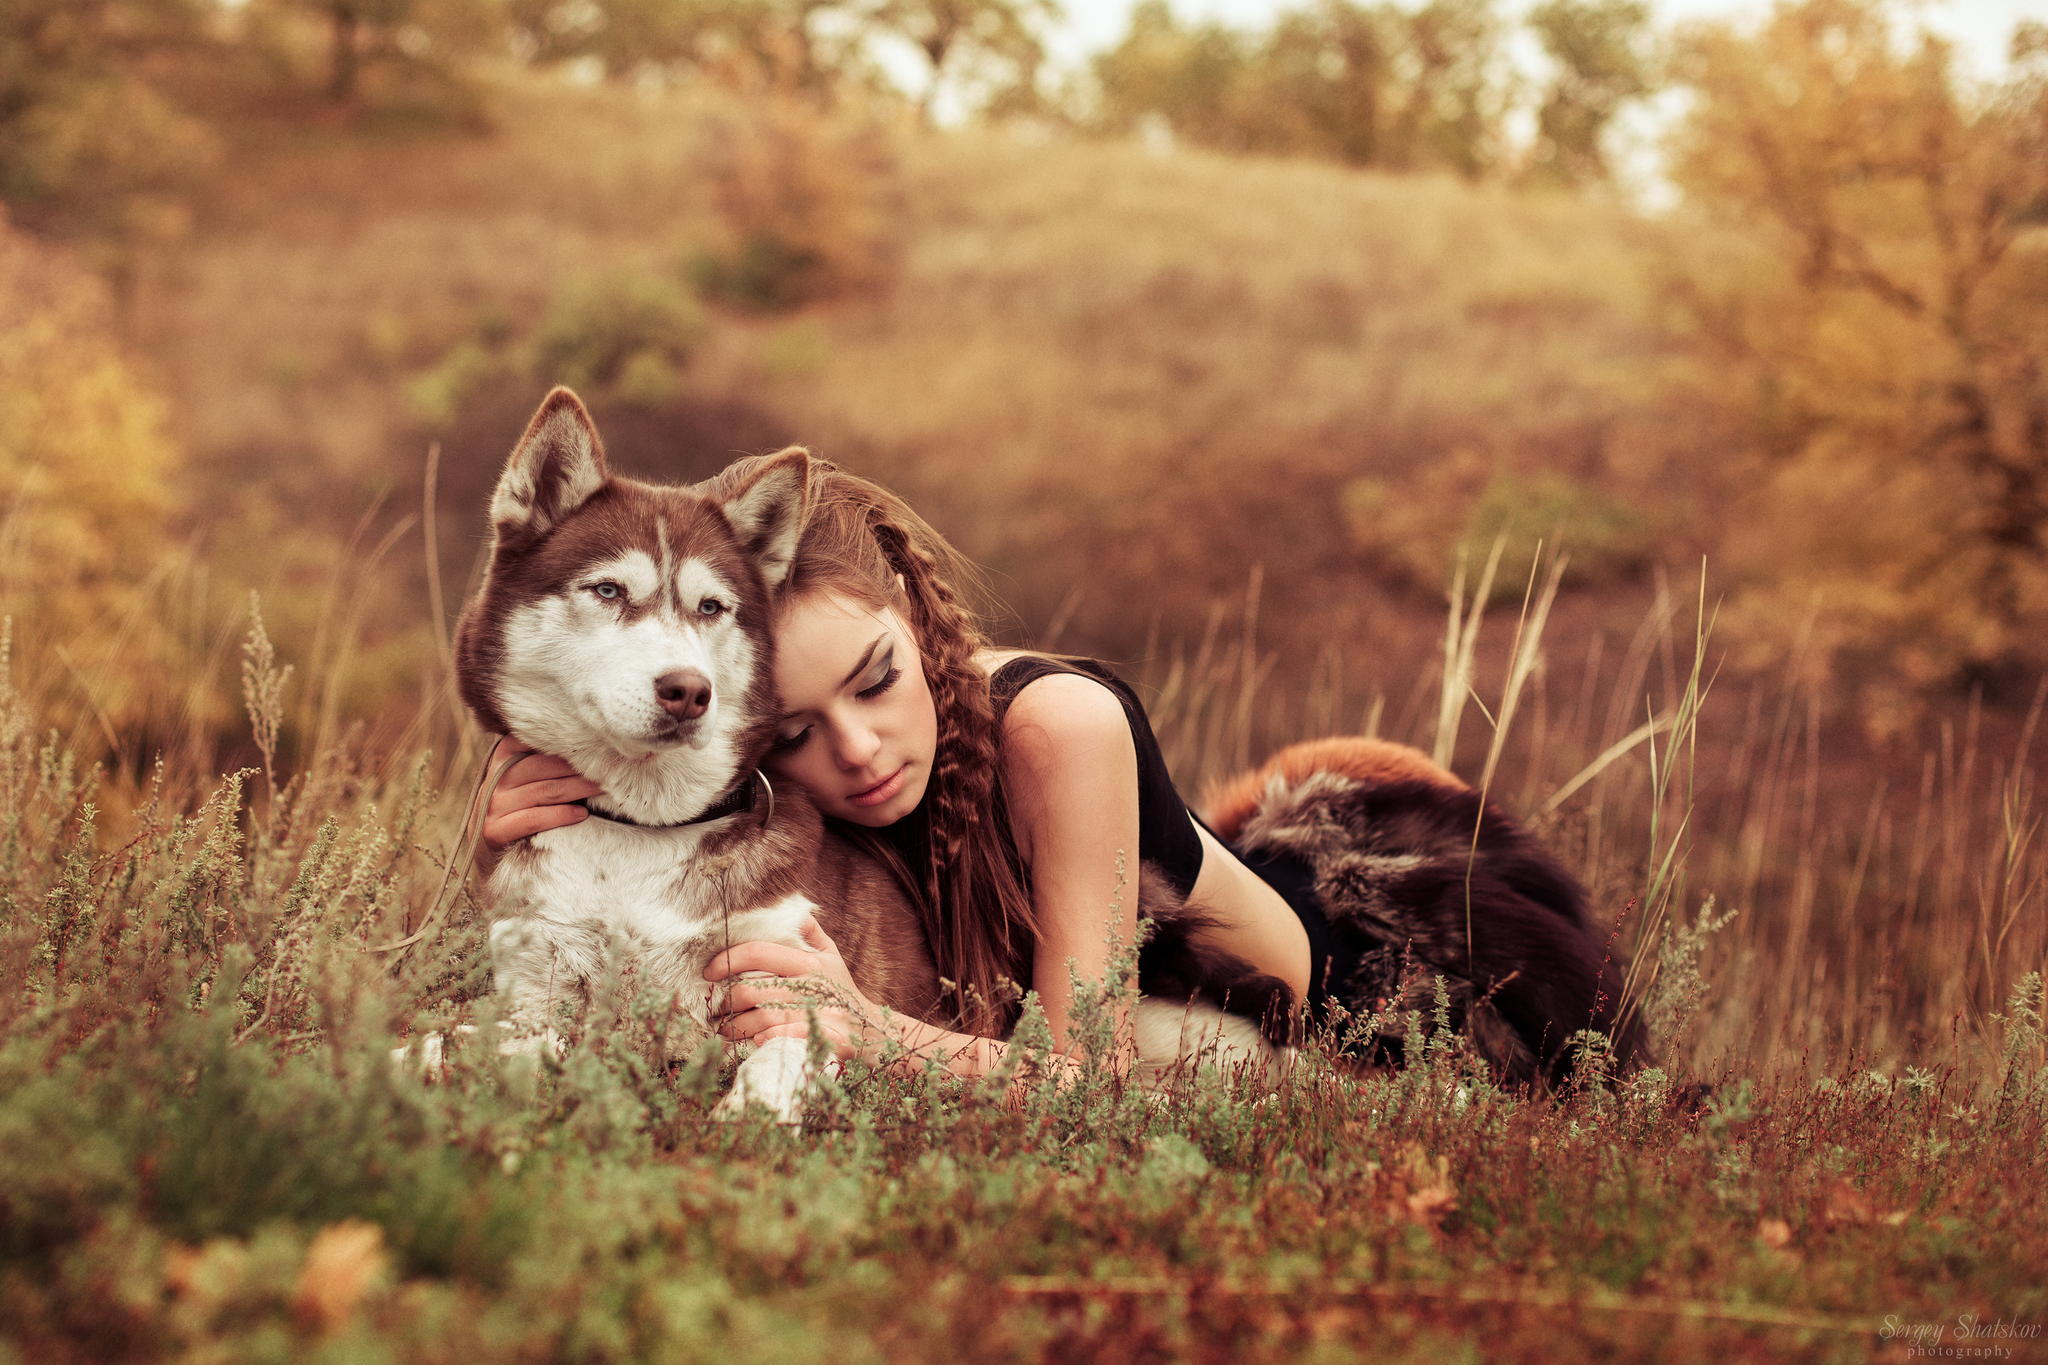 Model enjoying a break with her husky dog. by Sergey Shatskov